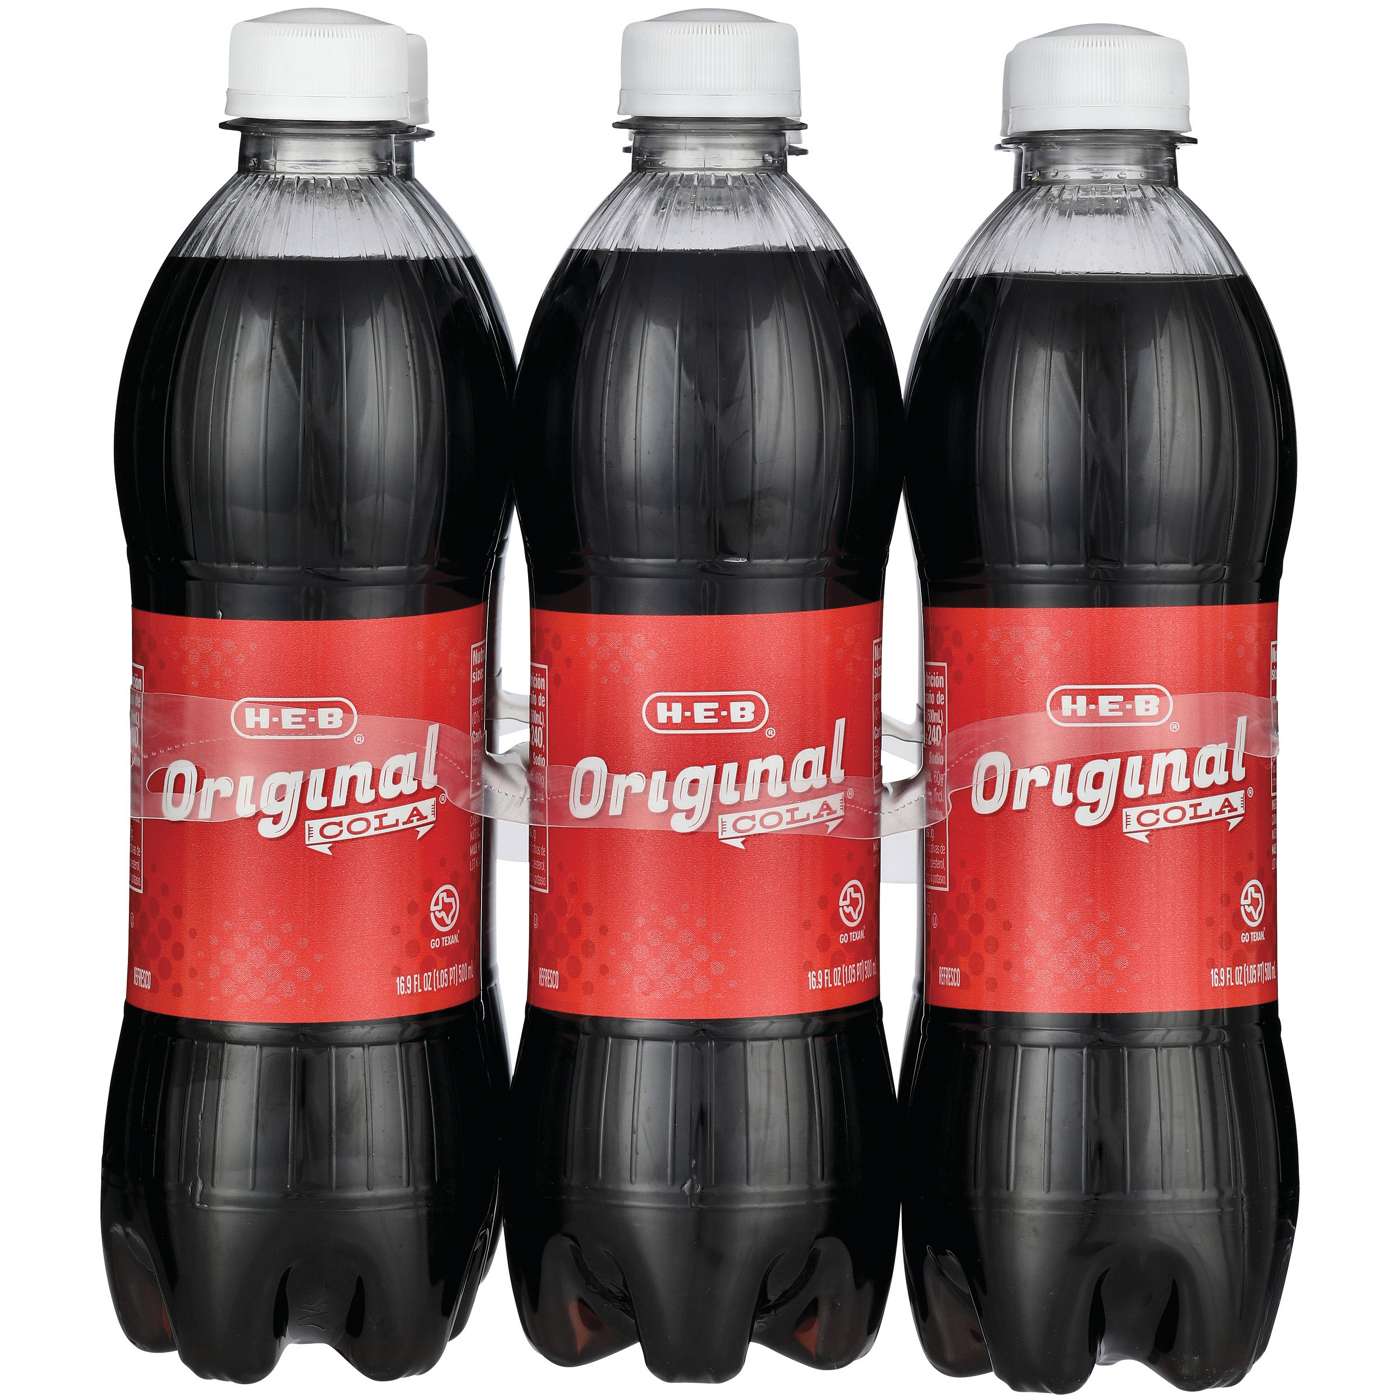 H-E-B Original Cola 6 pk Bottles; image 1 of 2